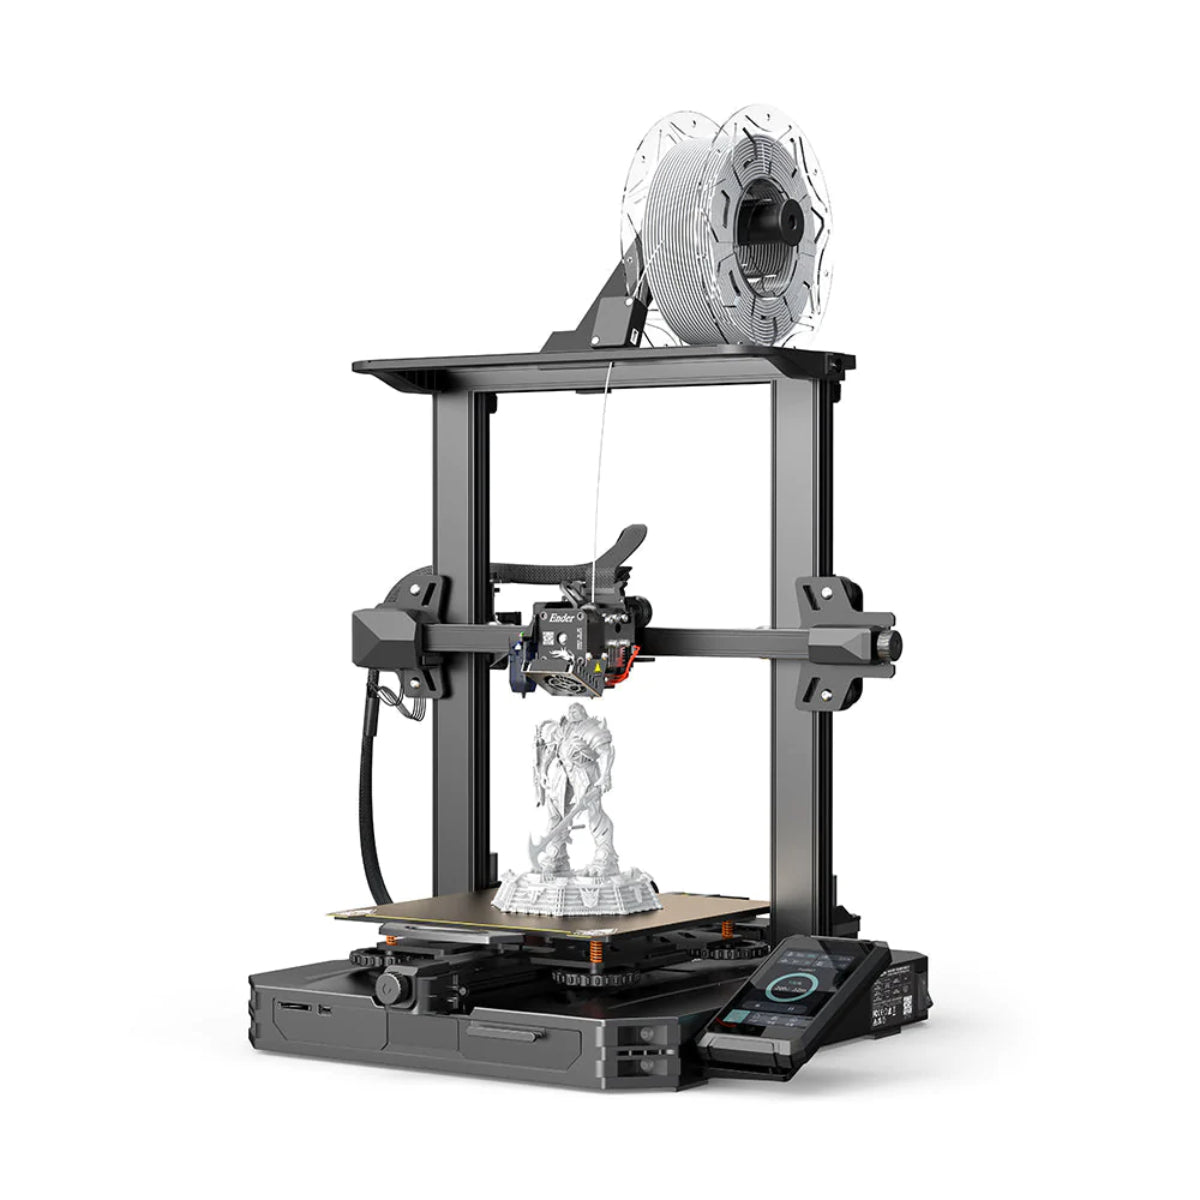 Creality Ender 3 S1 Pro - 3D Printer - Store 974 | ستور ٩٧٤